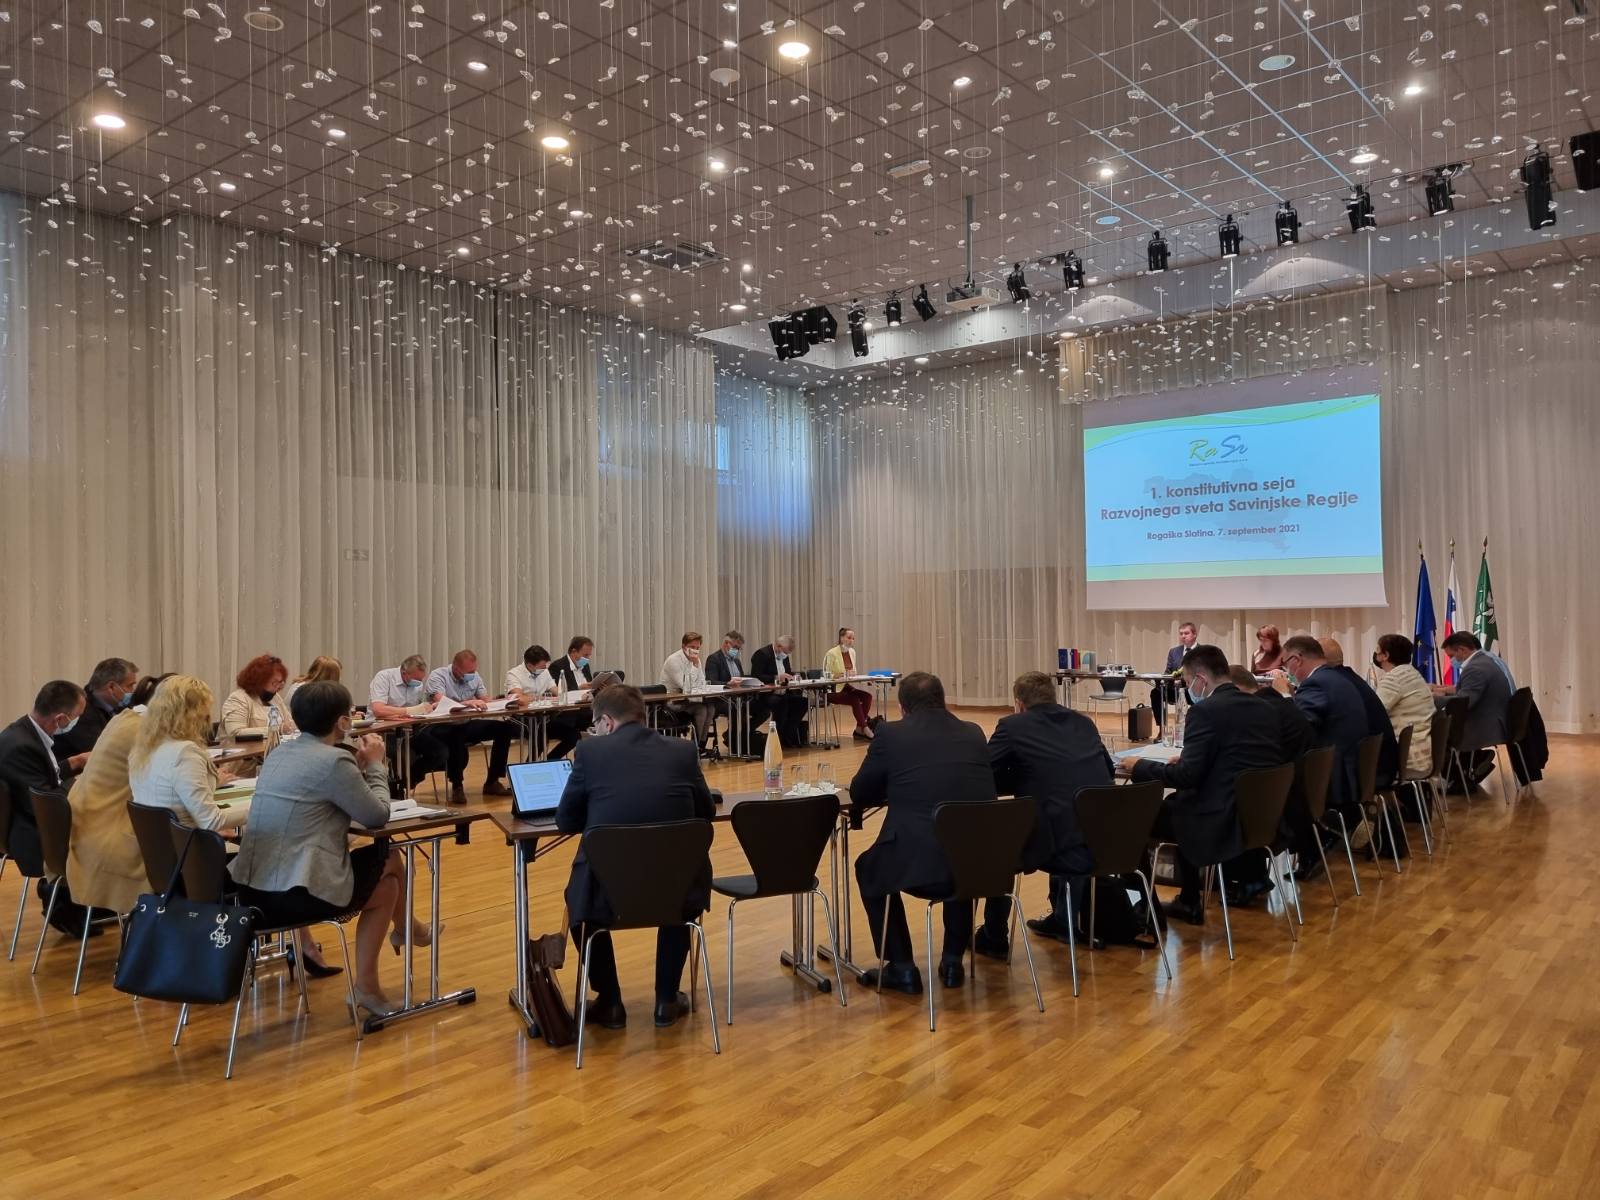 RASR presented the Regional Action Plan in Savinjska